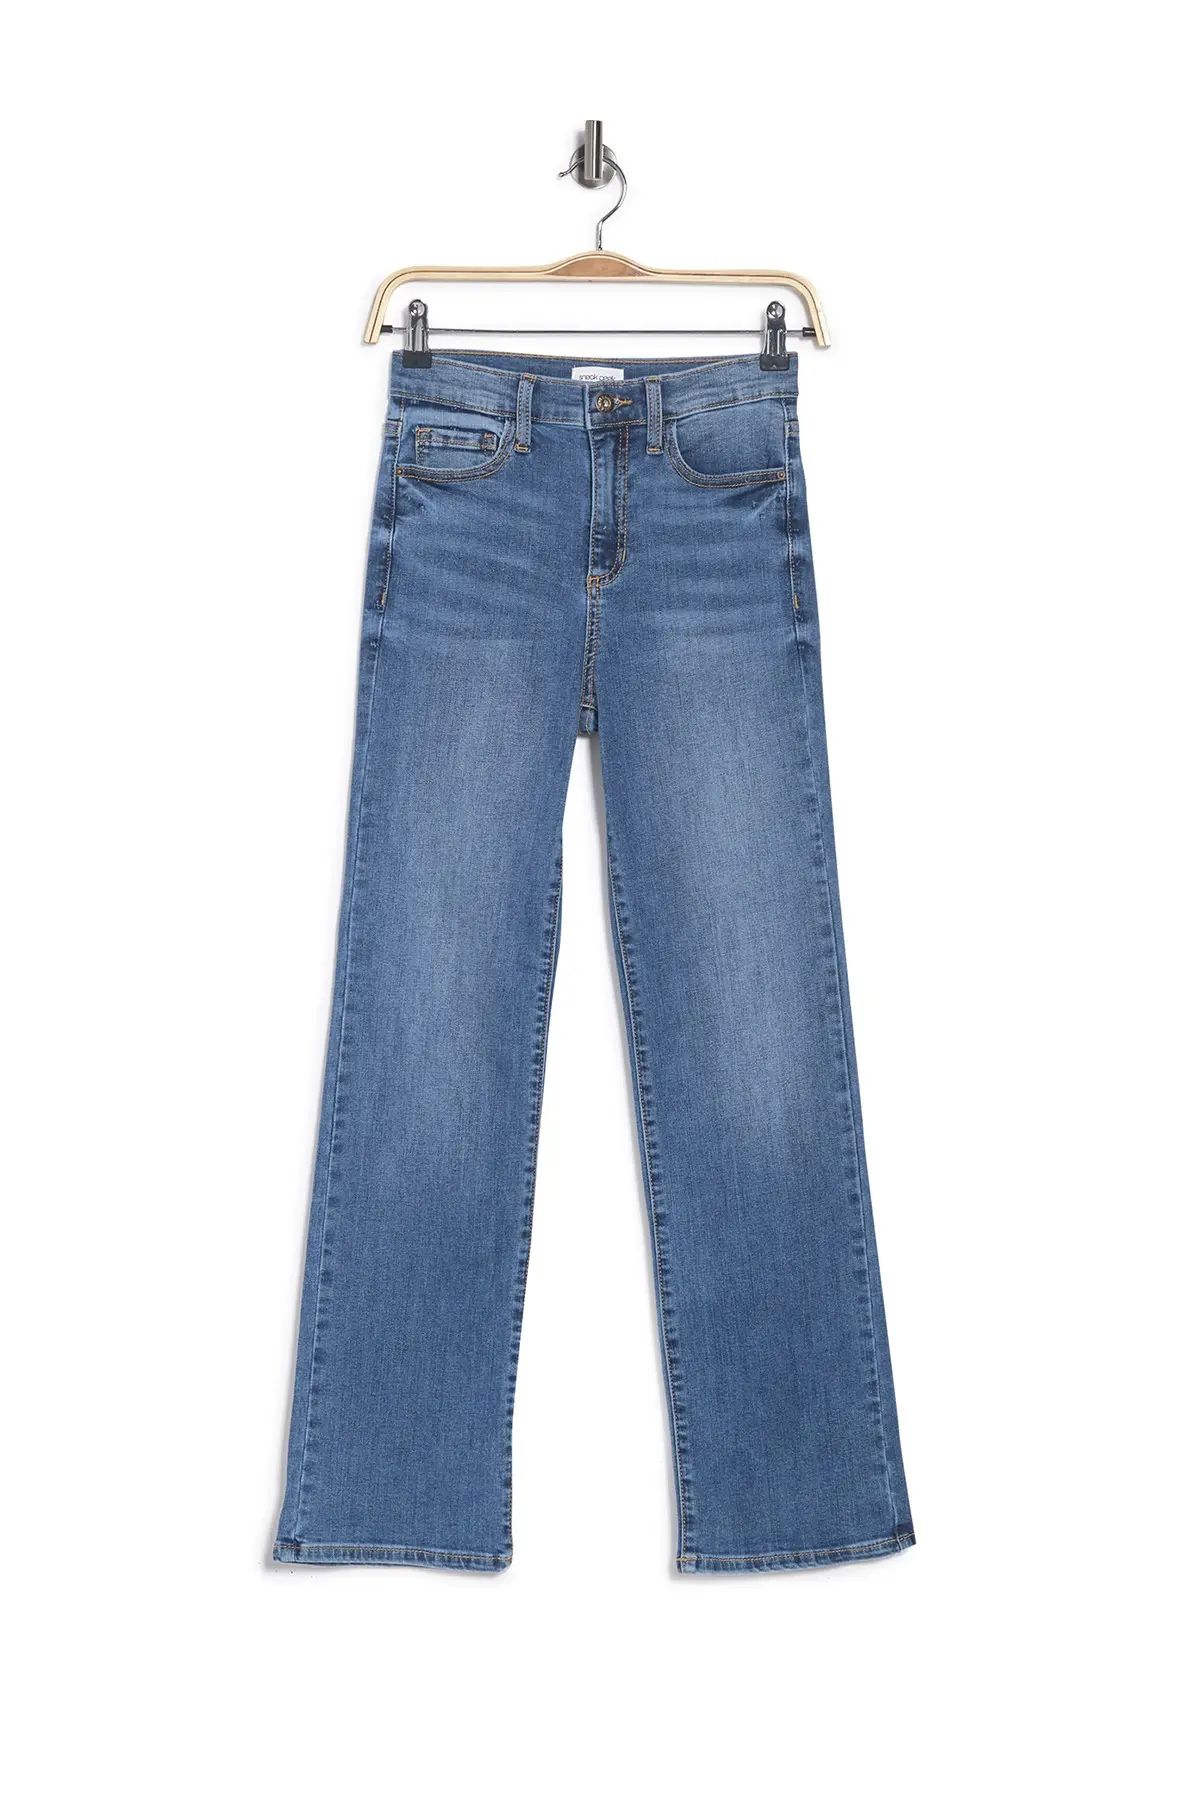 Sneak Peek Denim High Rise Straight Jeans at Nordstrom Rack | Nordstrom Rack